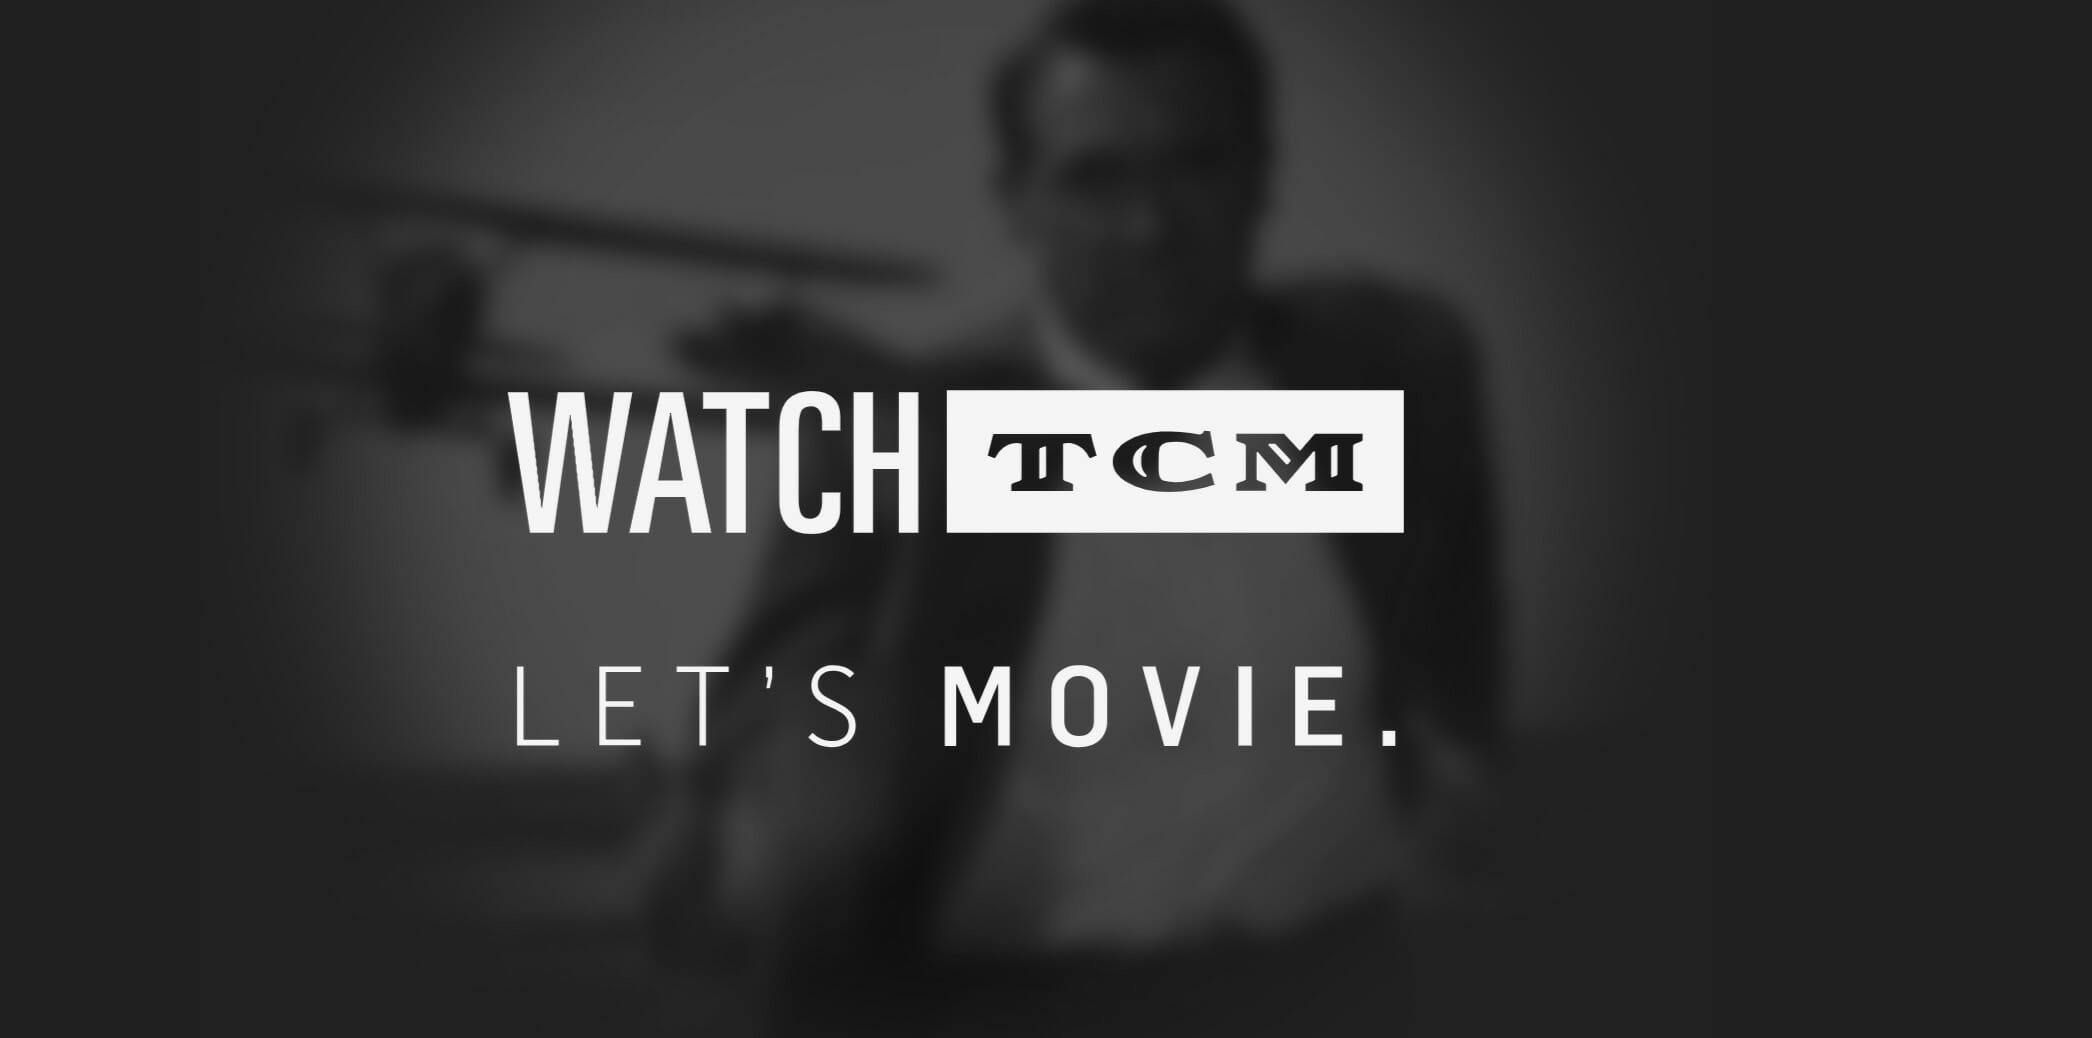 watch tcm on demand